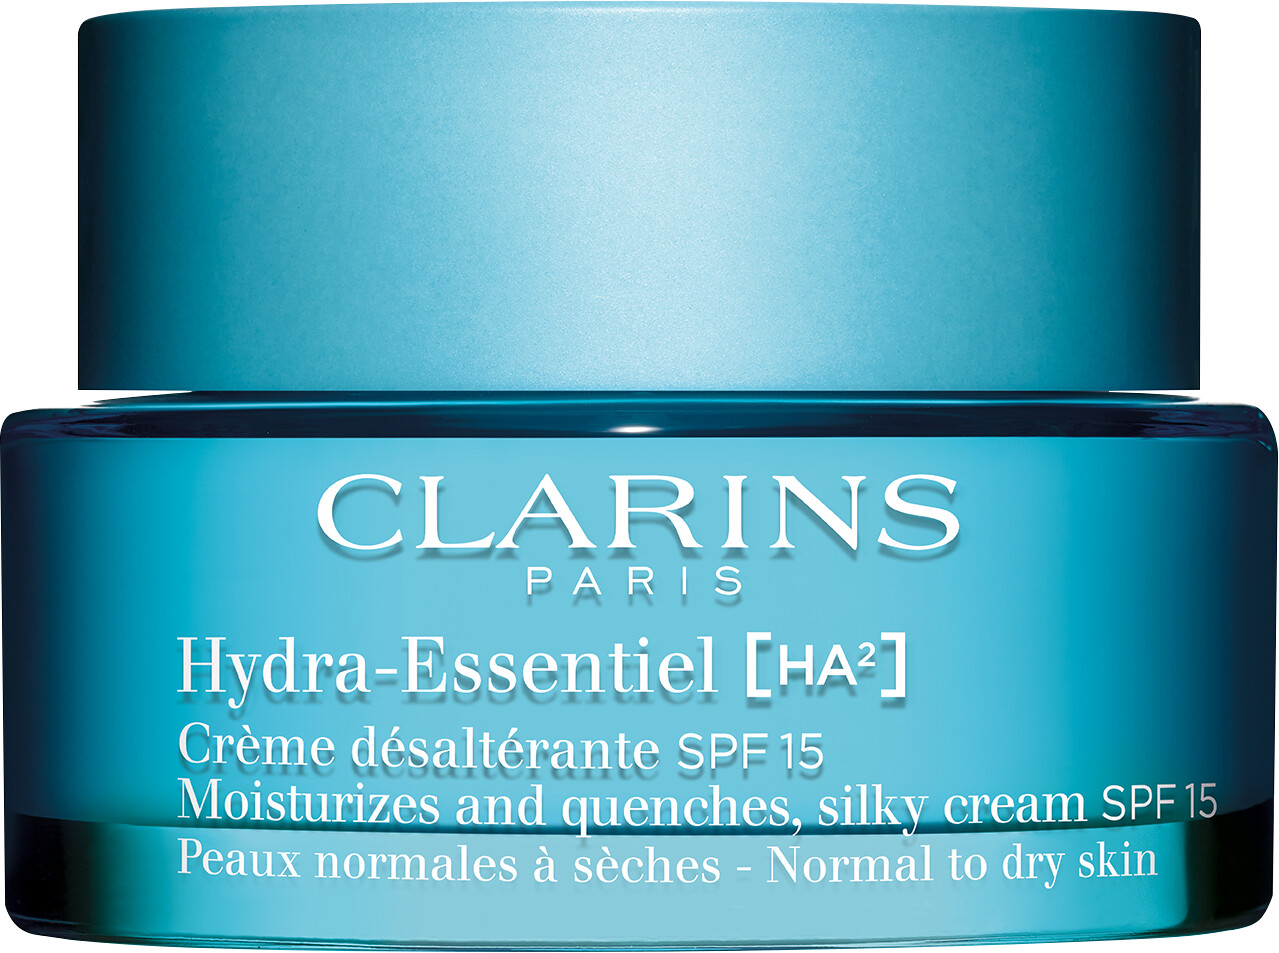 Clarins Hydra-Essentiel [HA2] Silky Cream SPF15 - Normal to Dry Skin 50ml